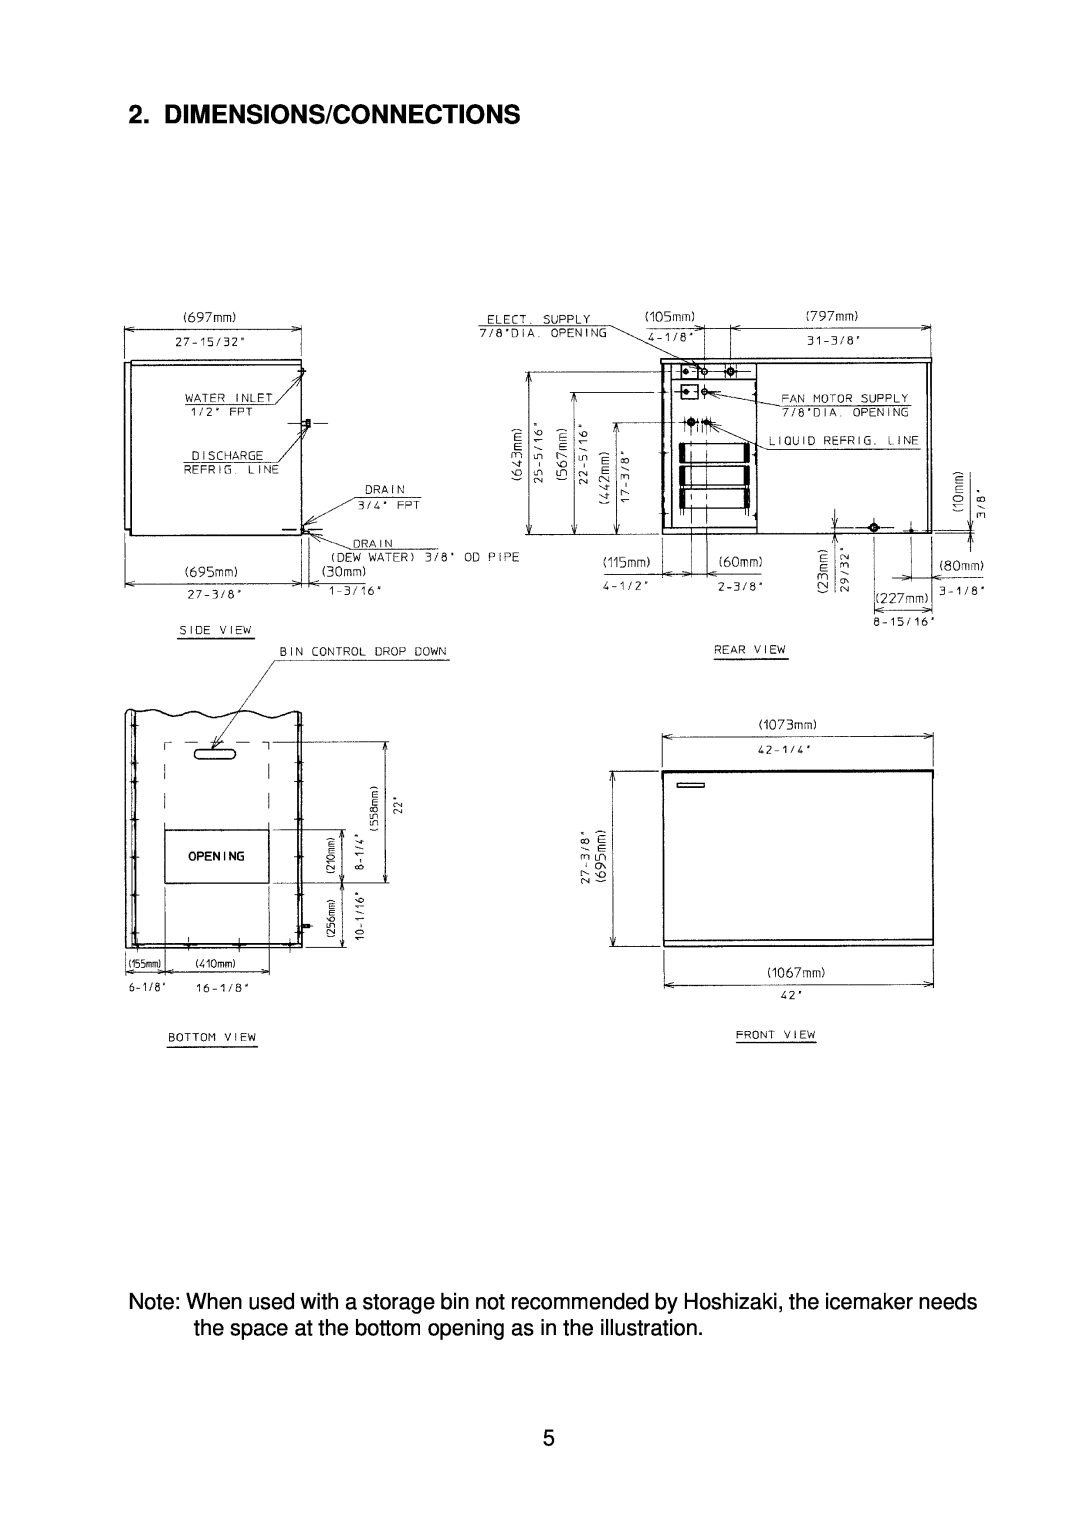 Hoshizaki KM-1300NRF instruction manual Dimensions/Connections 